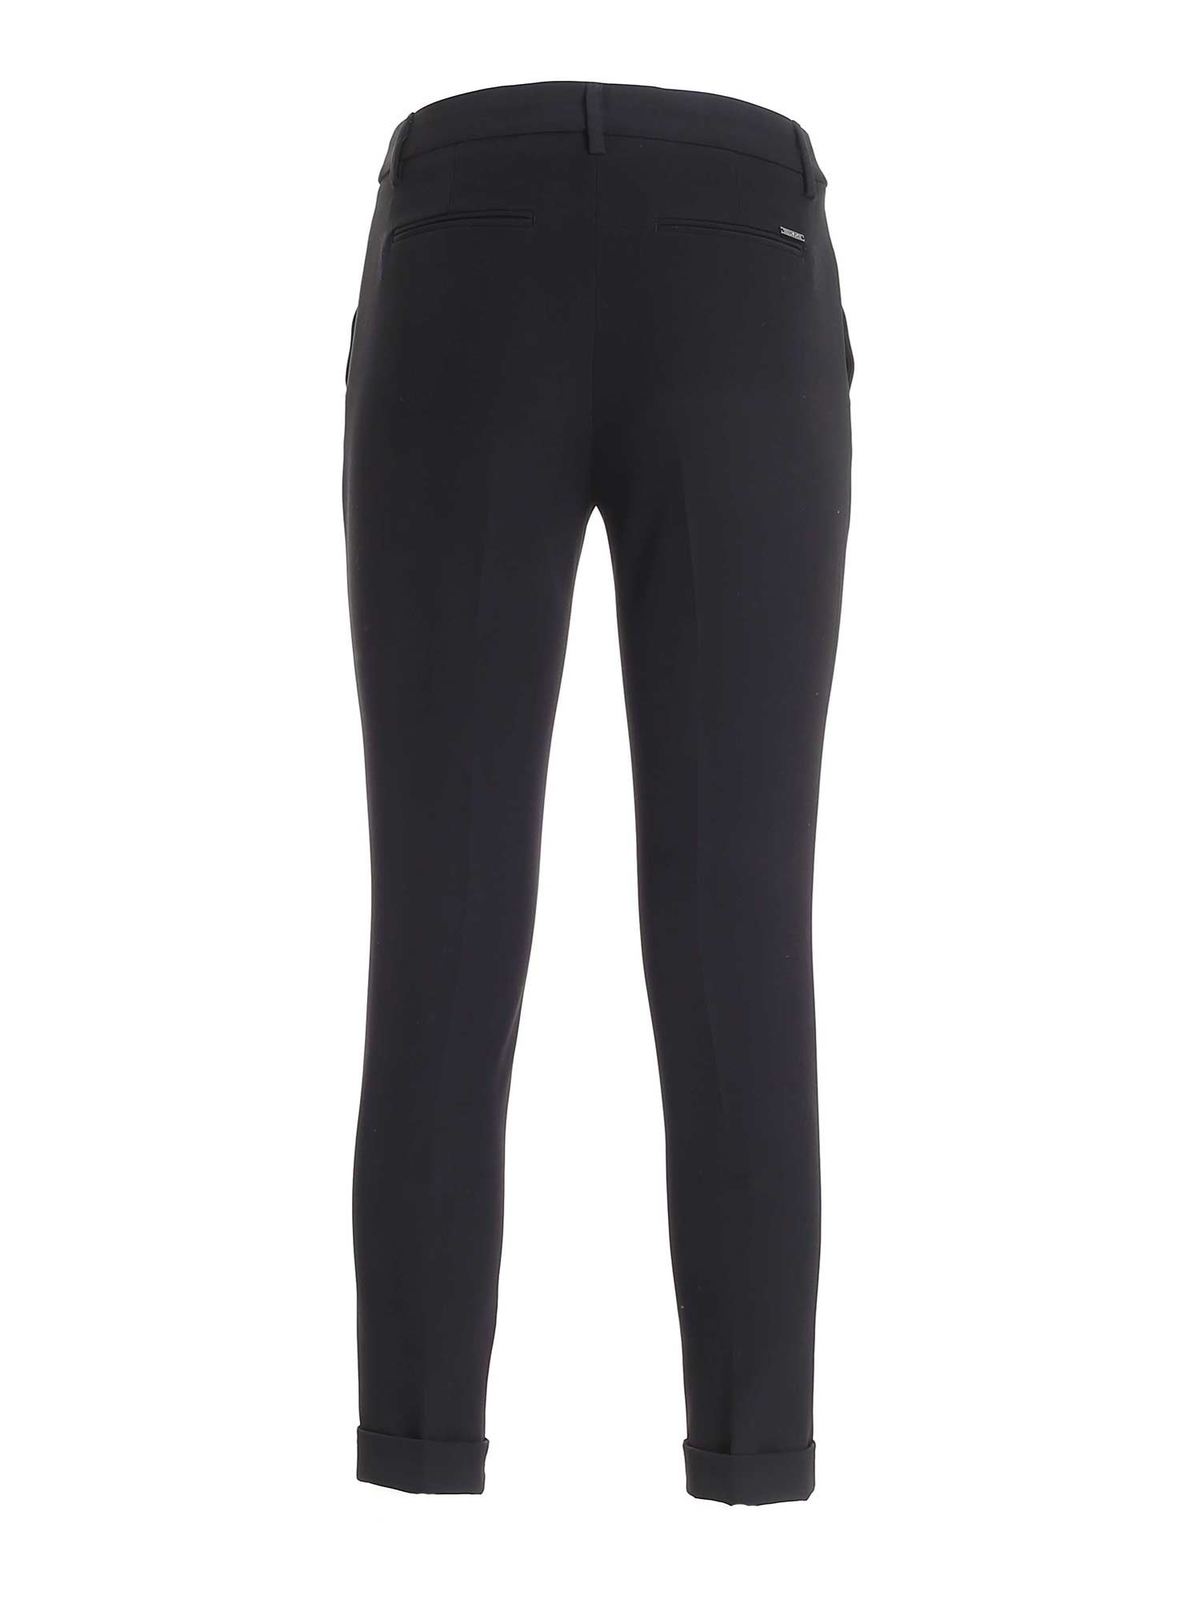 Vermelden Minimaliseren Faeröer Casual trousers Liu Jo - New York Luxury pants in black - WXX046T789622222